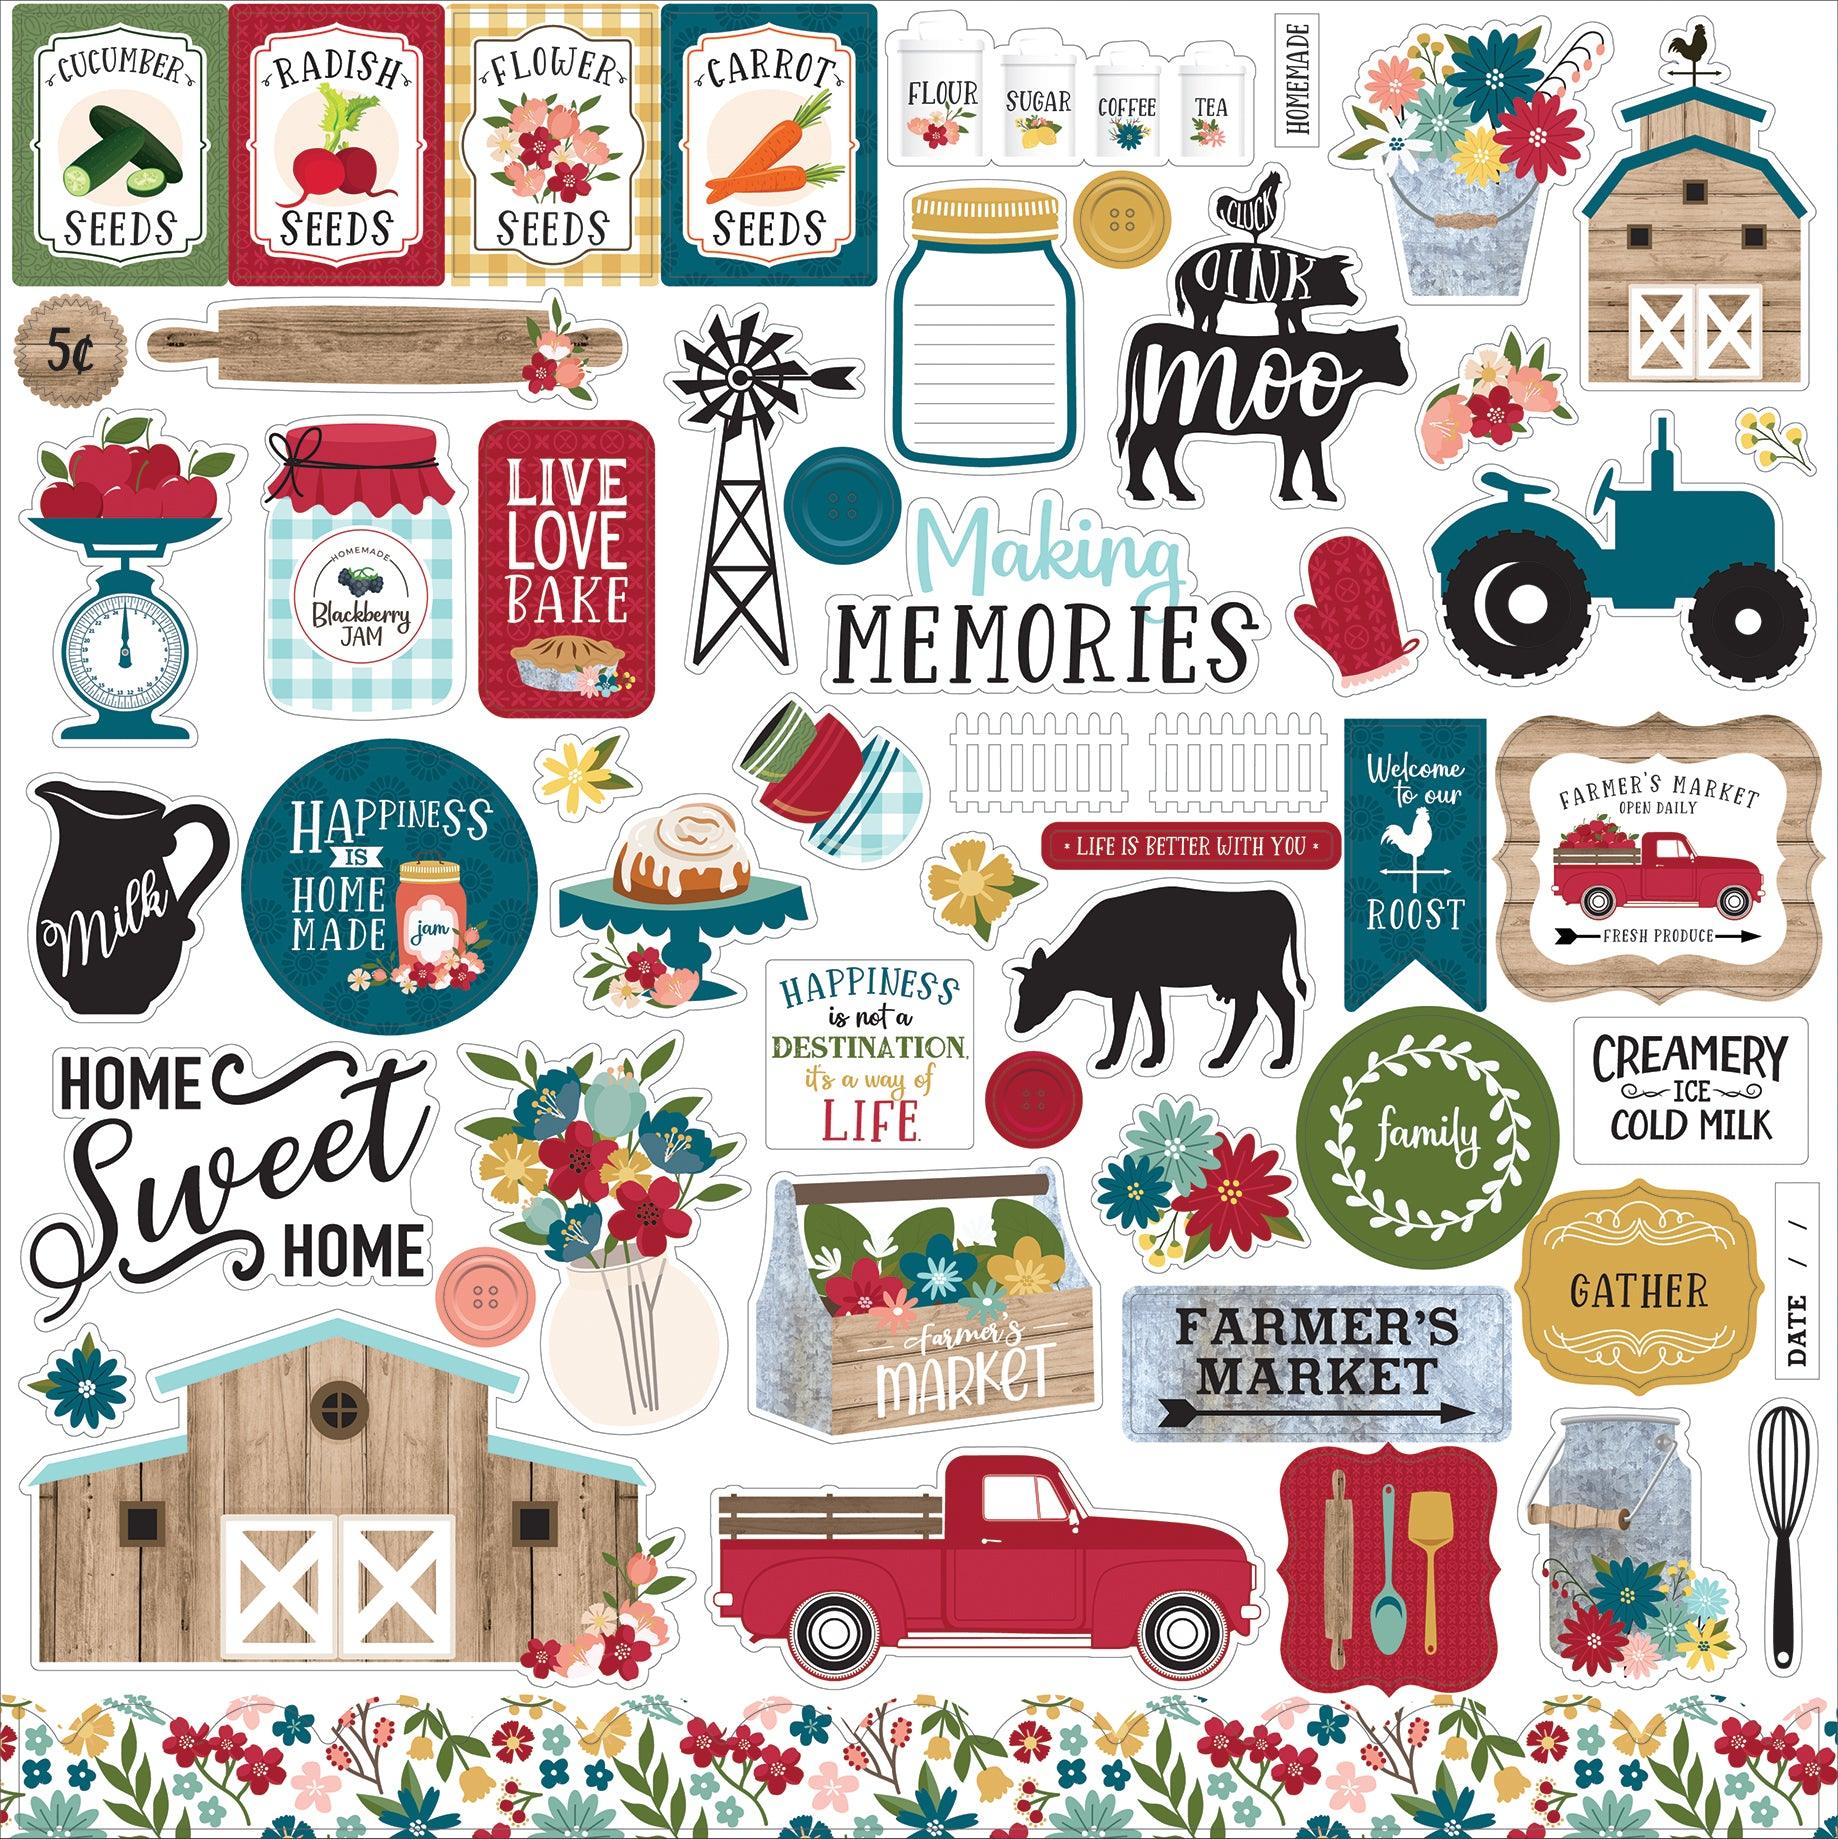 Farmer's Market Collection 12 x 12 Scrapbook Sticker Sheet by Echo Park Paper - Scrapbook Supply Companies